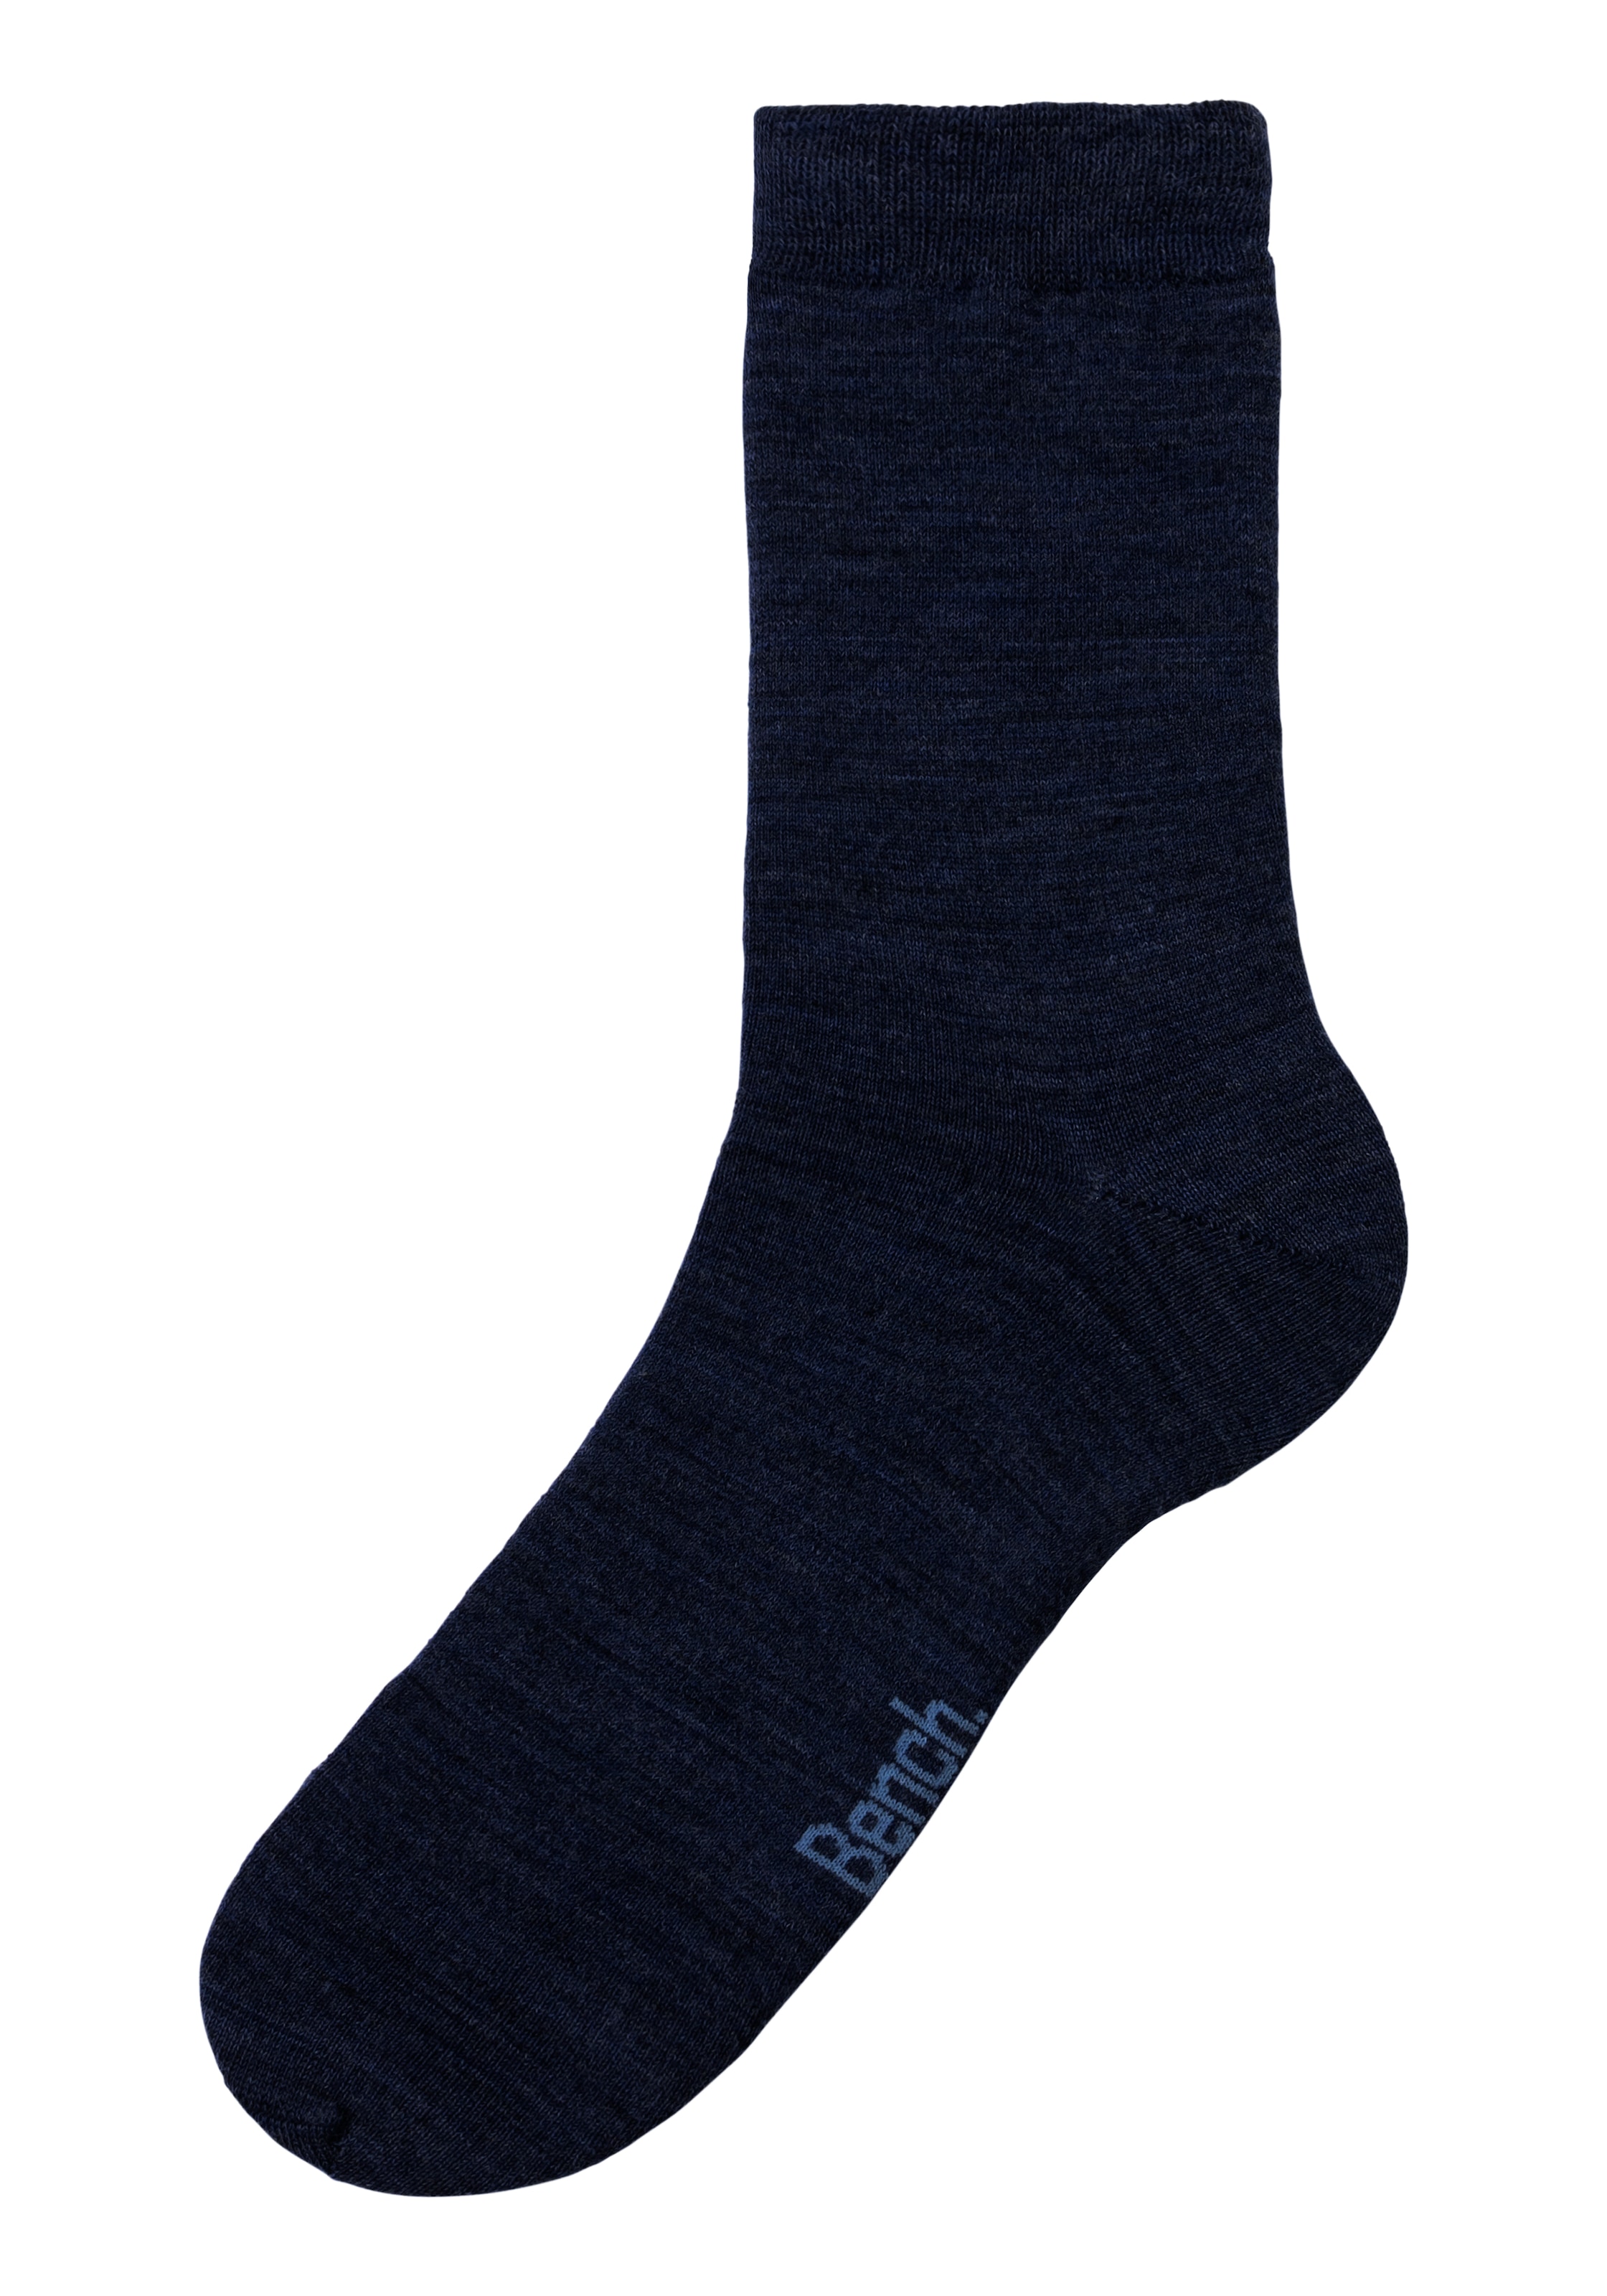 Bench. Socken, (3 Paar), Unterwäsche flauschigem Material kaufen Wollsocken & LASCANA aus Bademode, » Lingerie online 